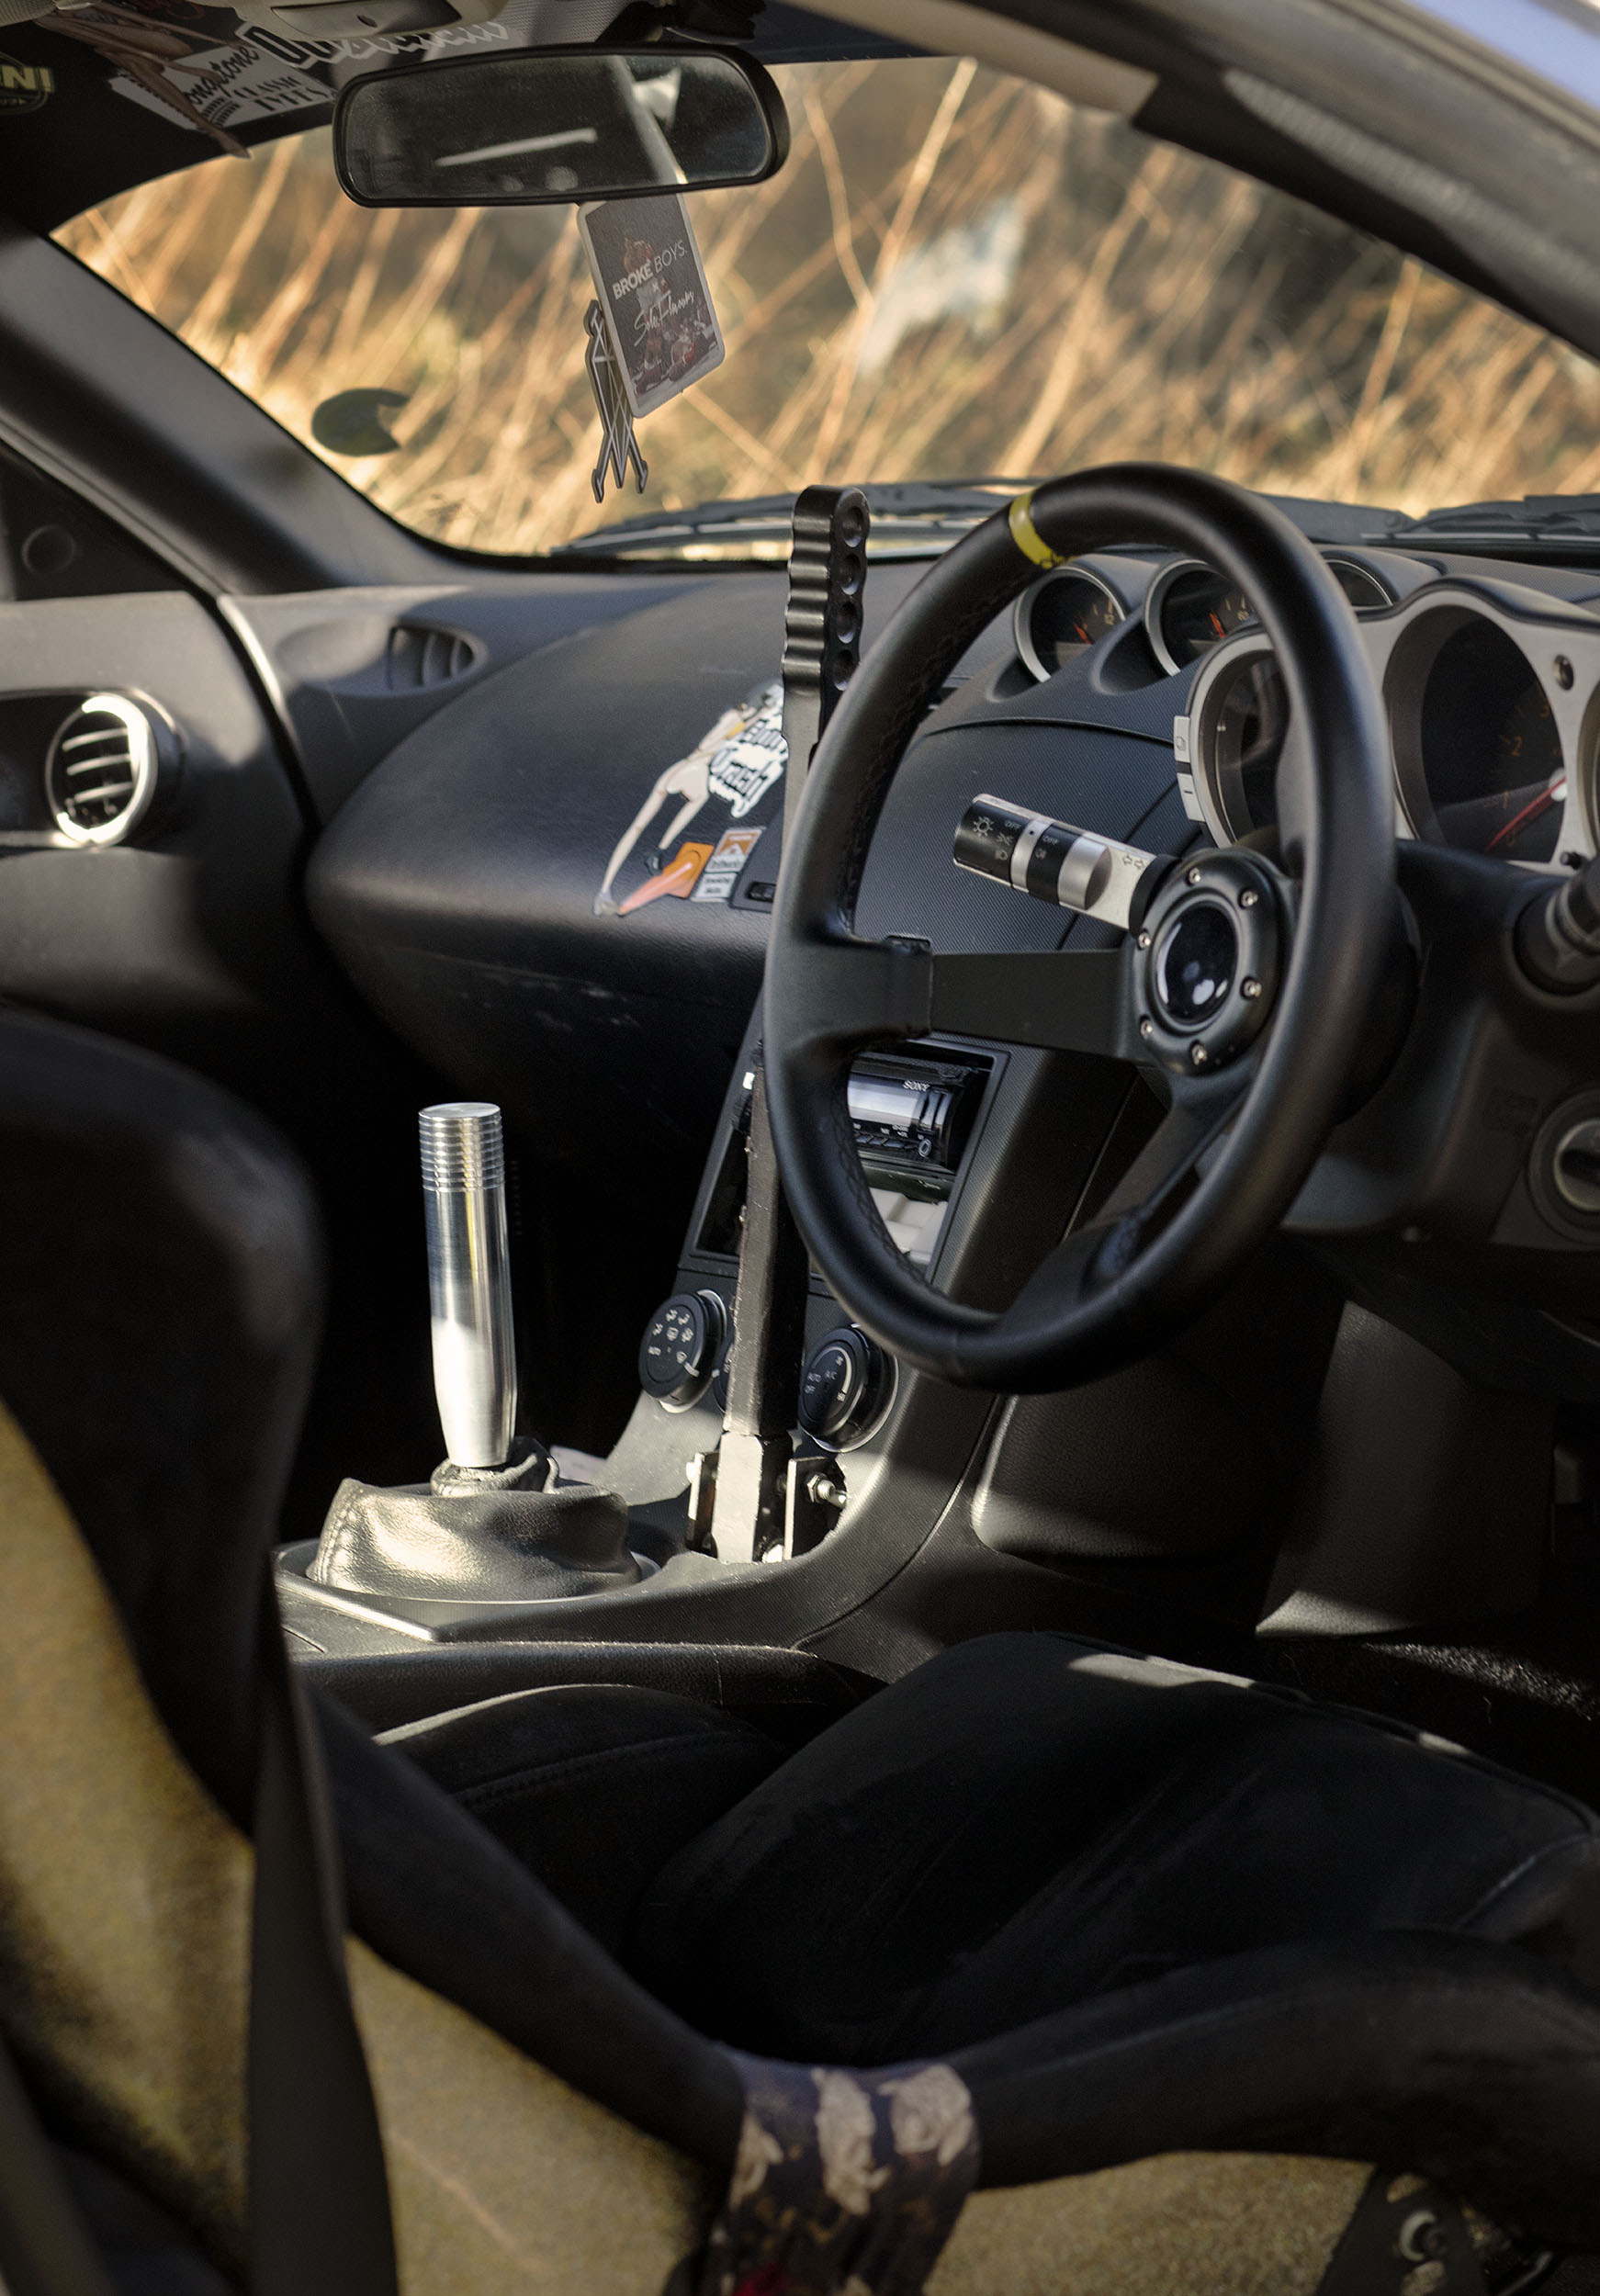 BA Photography work by Georgia Wilding-Glendye showing the interior of a 350Z Nissan drift car.